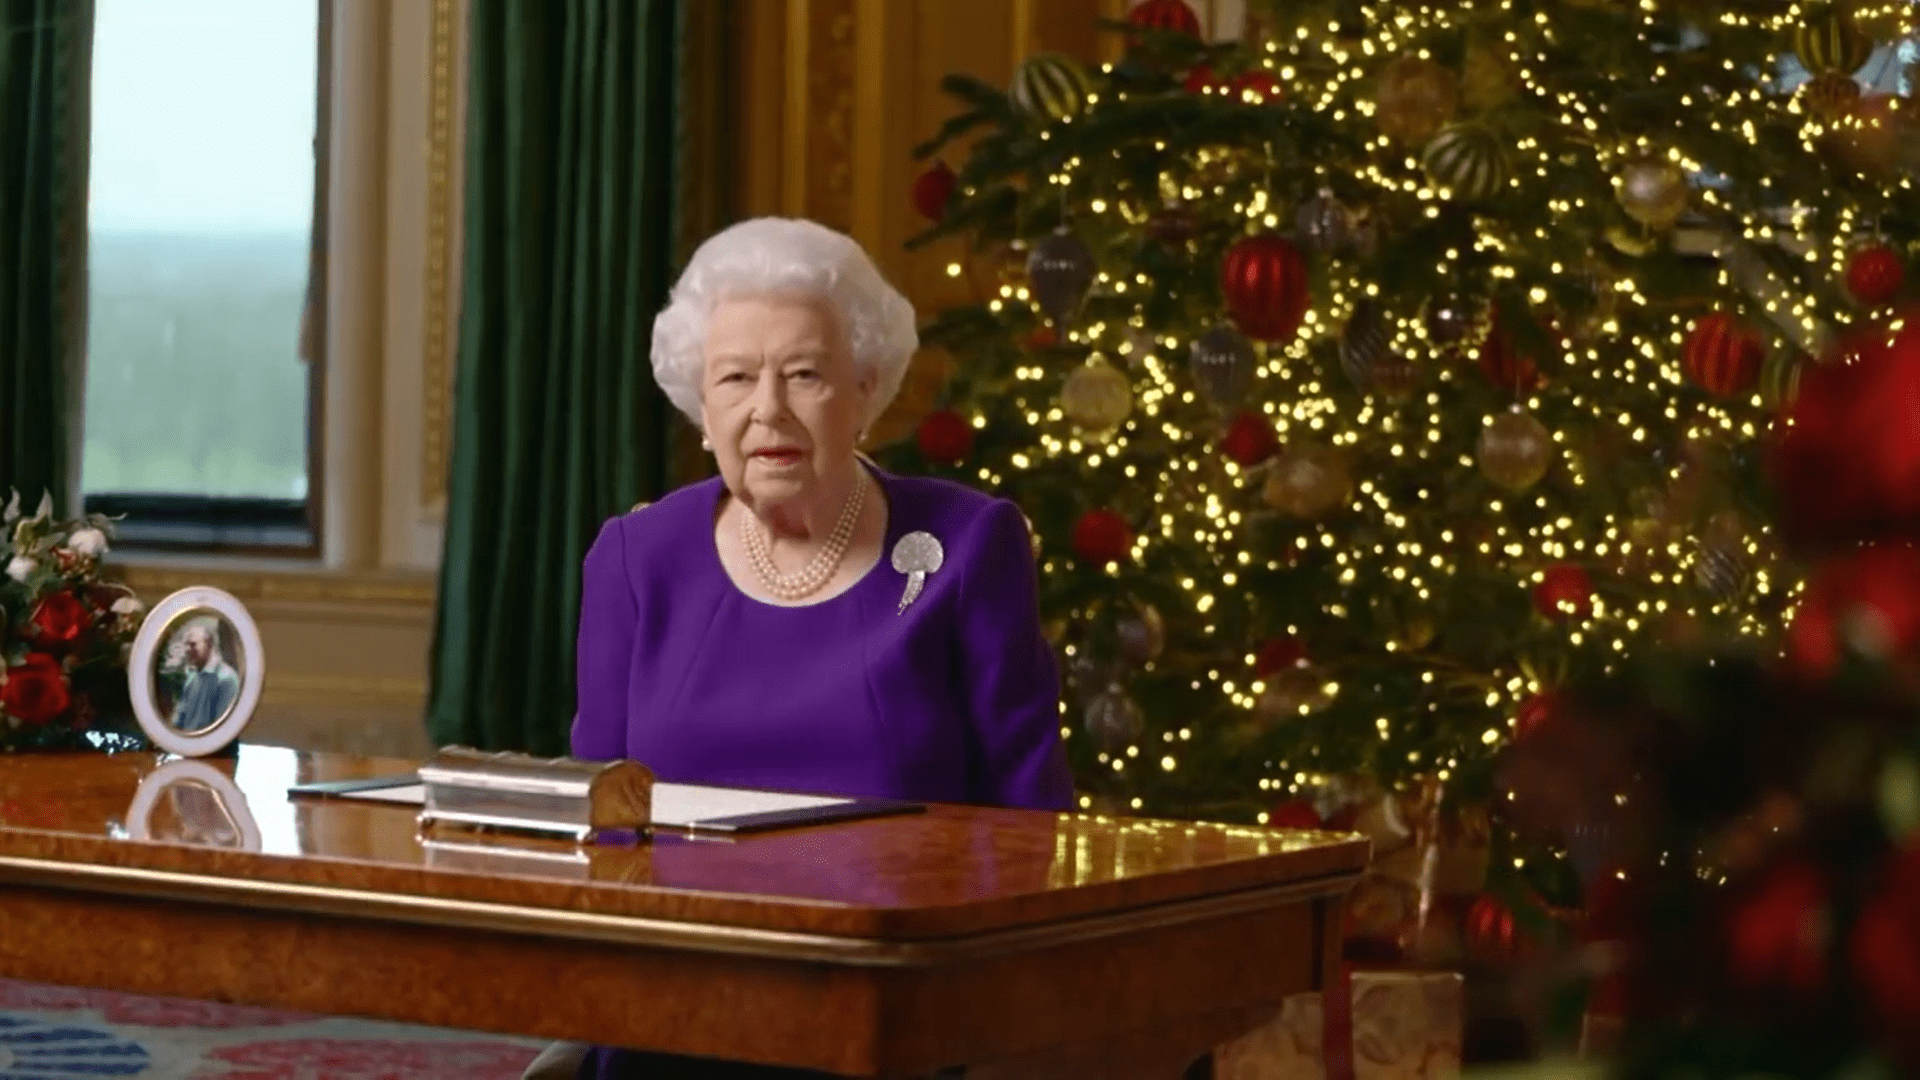 Queen Elizabeth during her Christmas speech from Windsor Castle in December 2020. | Photo: Instagram/theroyalfamily